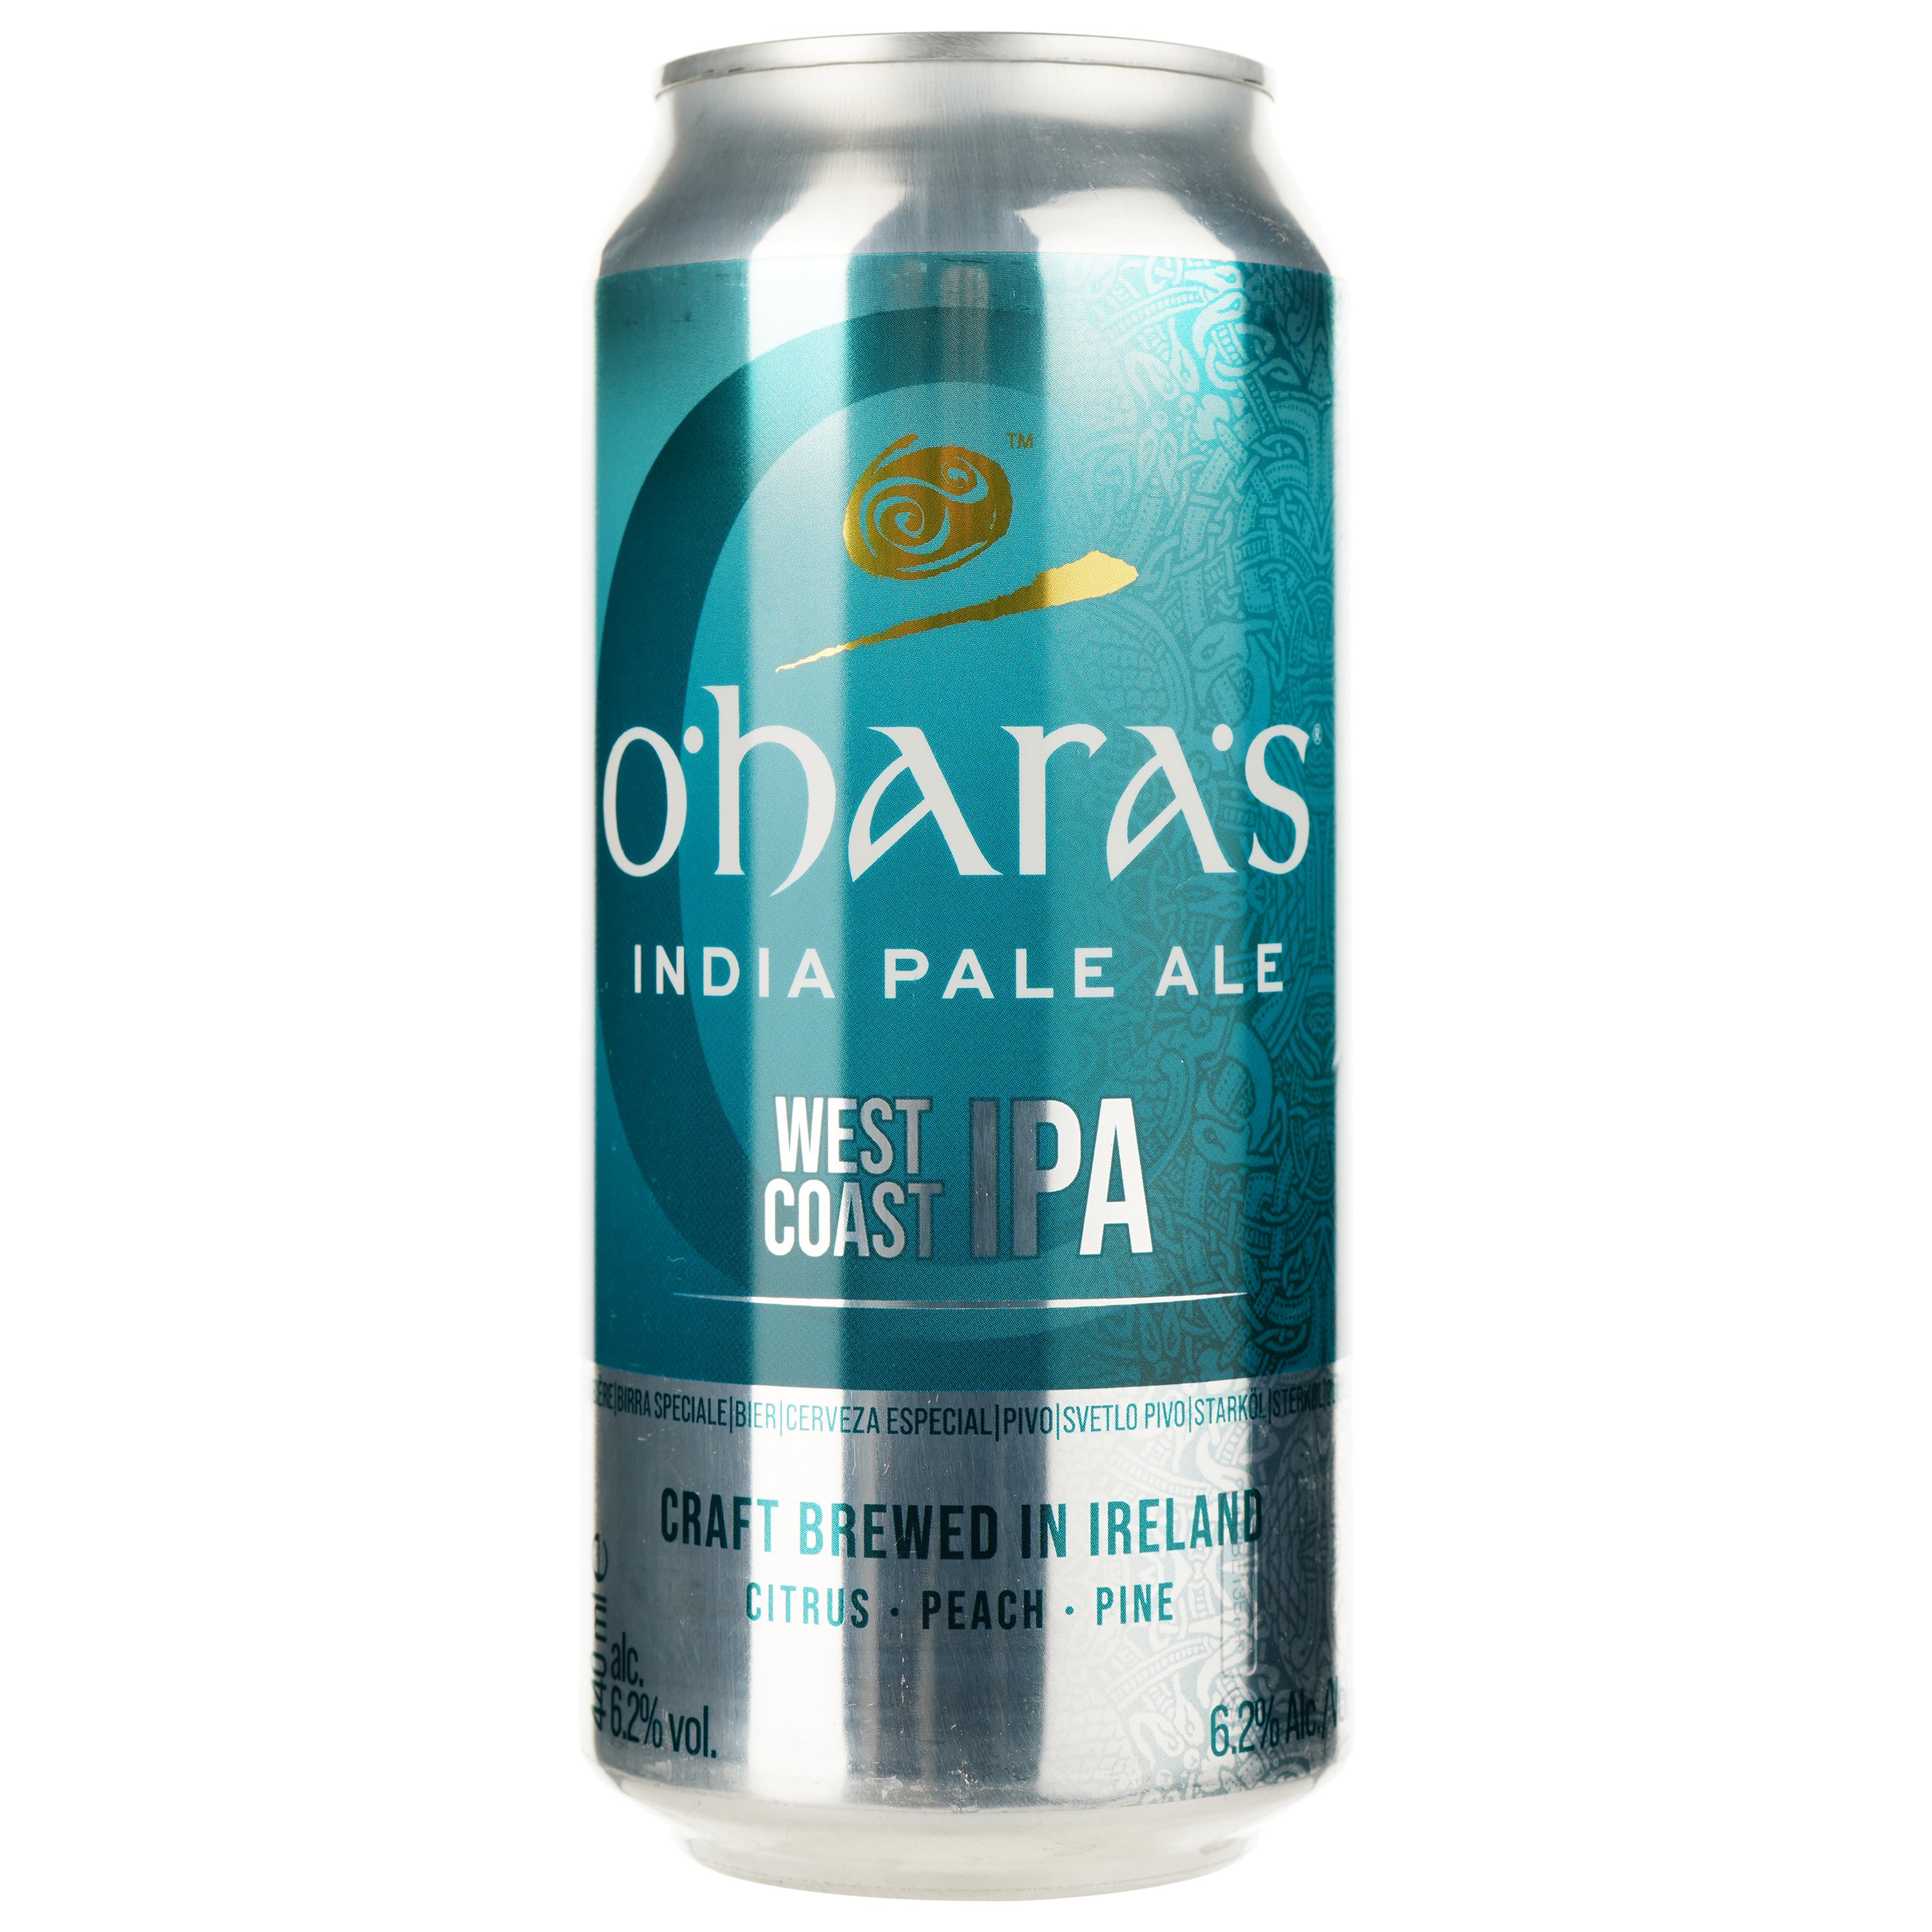 Пиво O'Hara's West Coast IPA, полутемное, 6,2%, ж/б, 0,44 л - фото 1